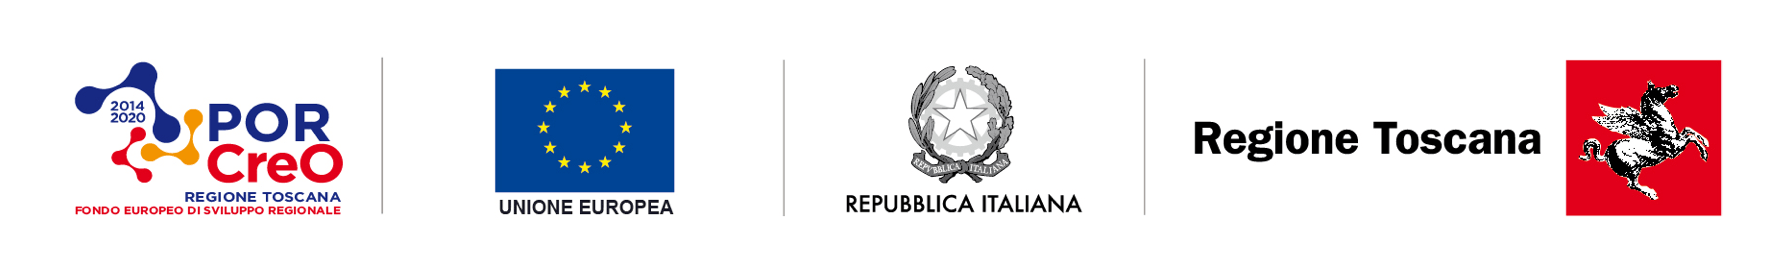 Loghi: FESR, Unione Europea, Repubblica Italiana, Regione Toscana